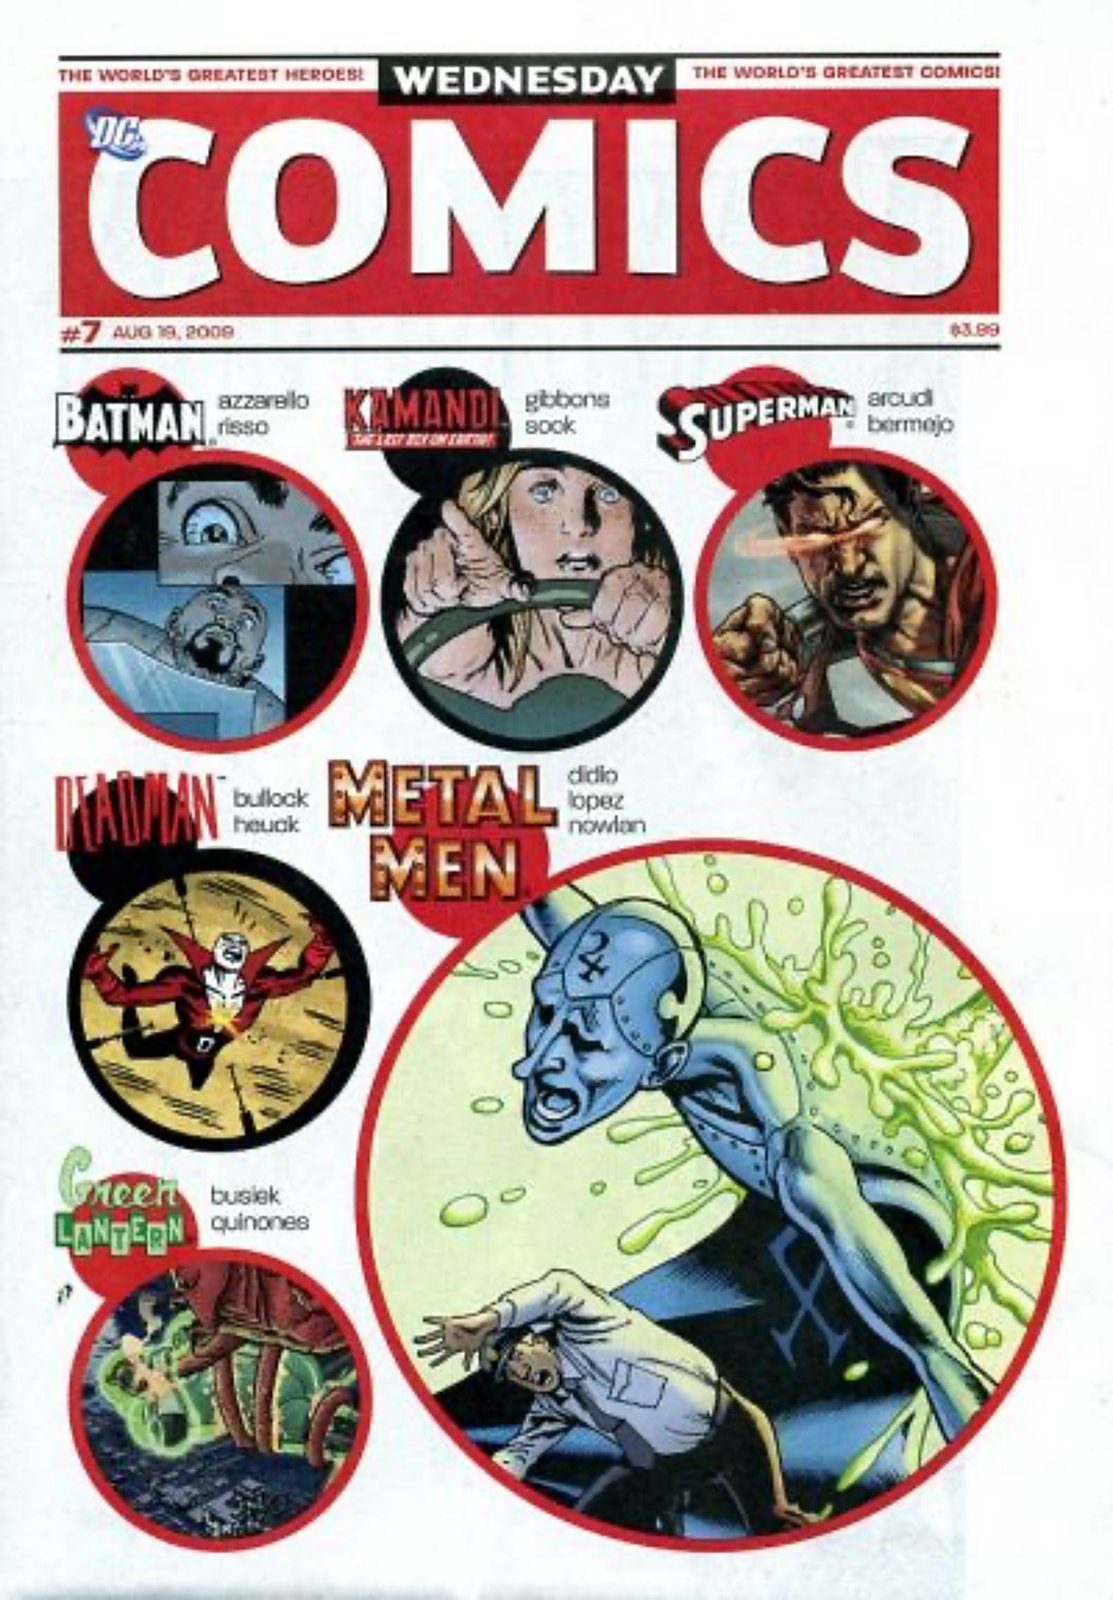 Wednesday Comics #7 (2009) DC Comics